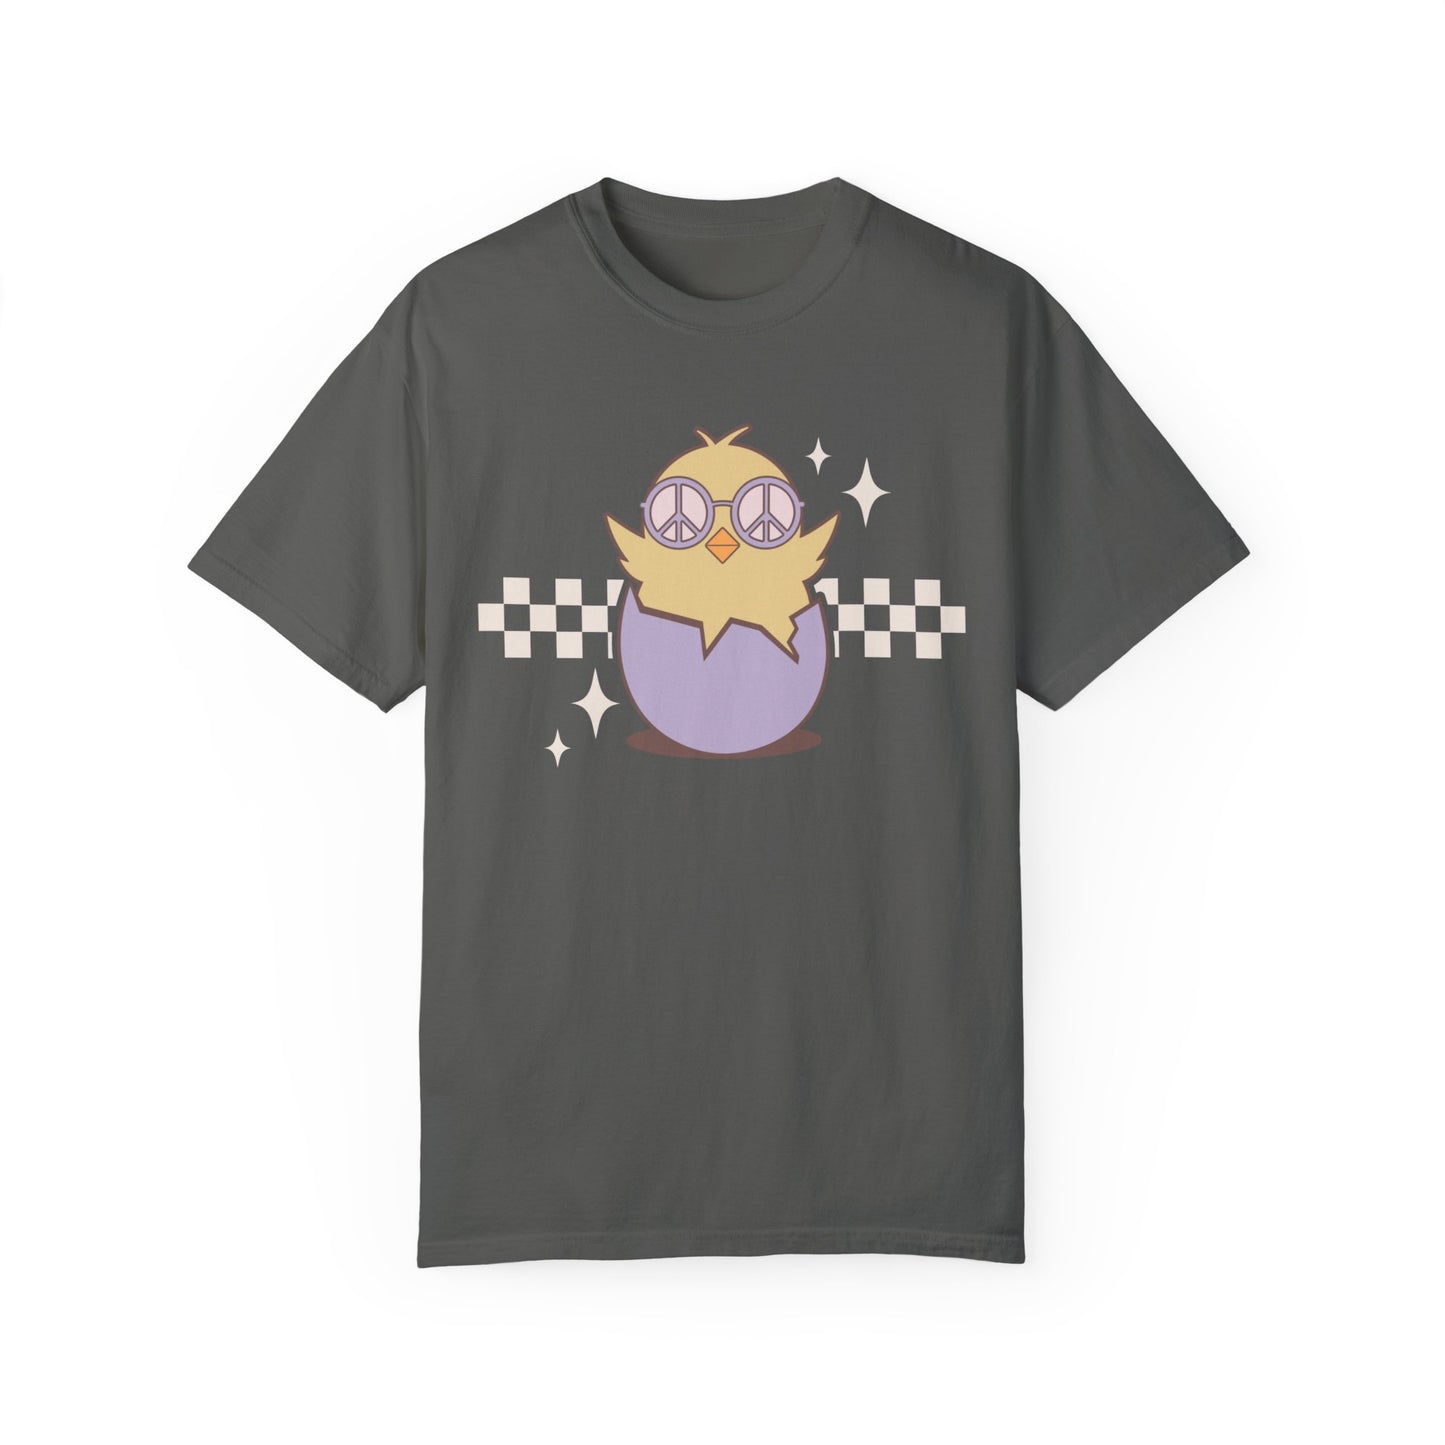 Groovy Chick Shirt